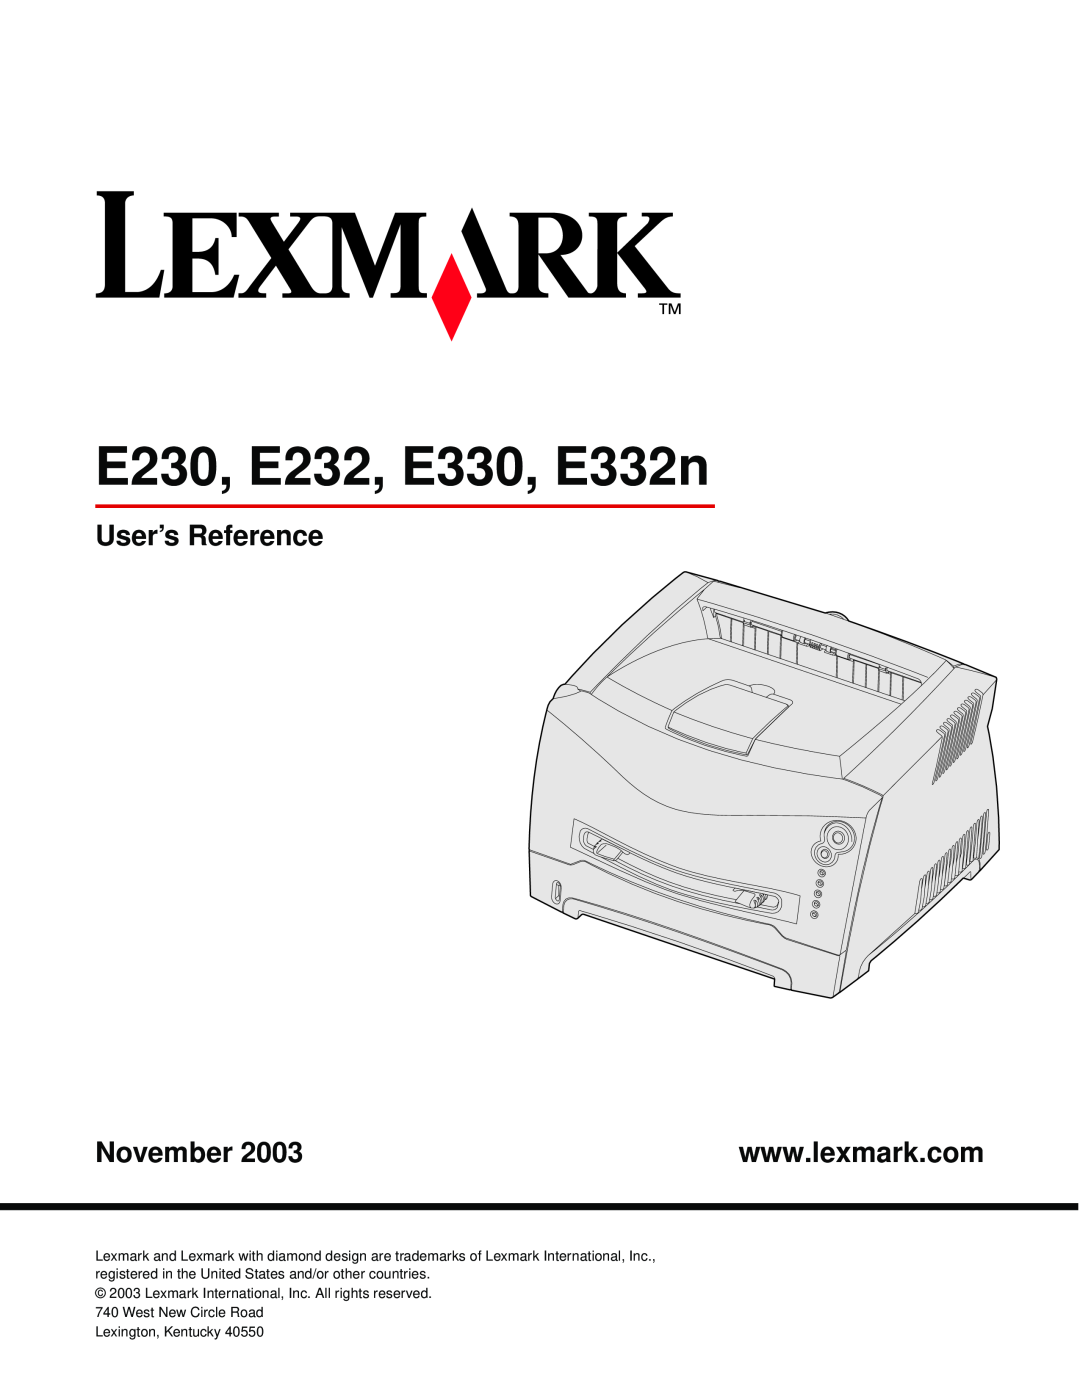 Lexmark manual E230, E232, E330, E332n, User’s Reference, November 